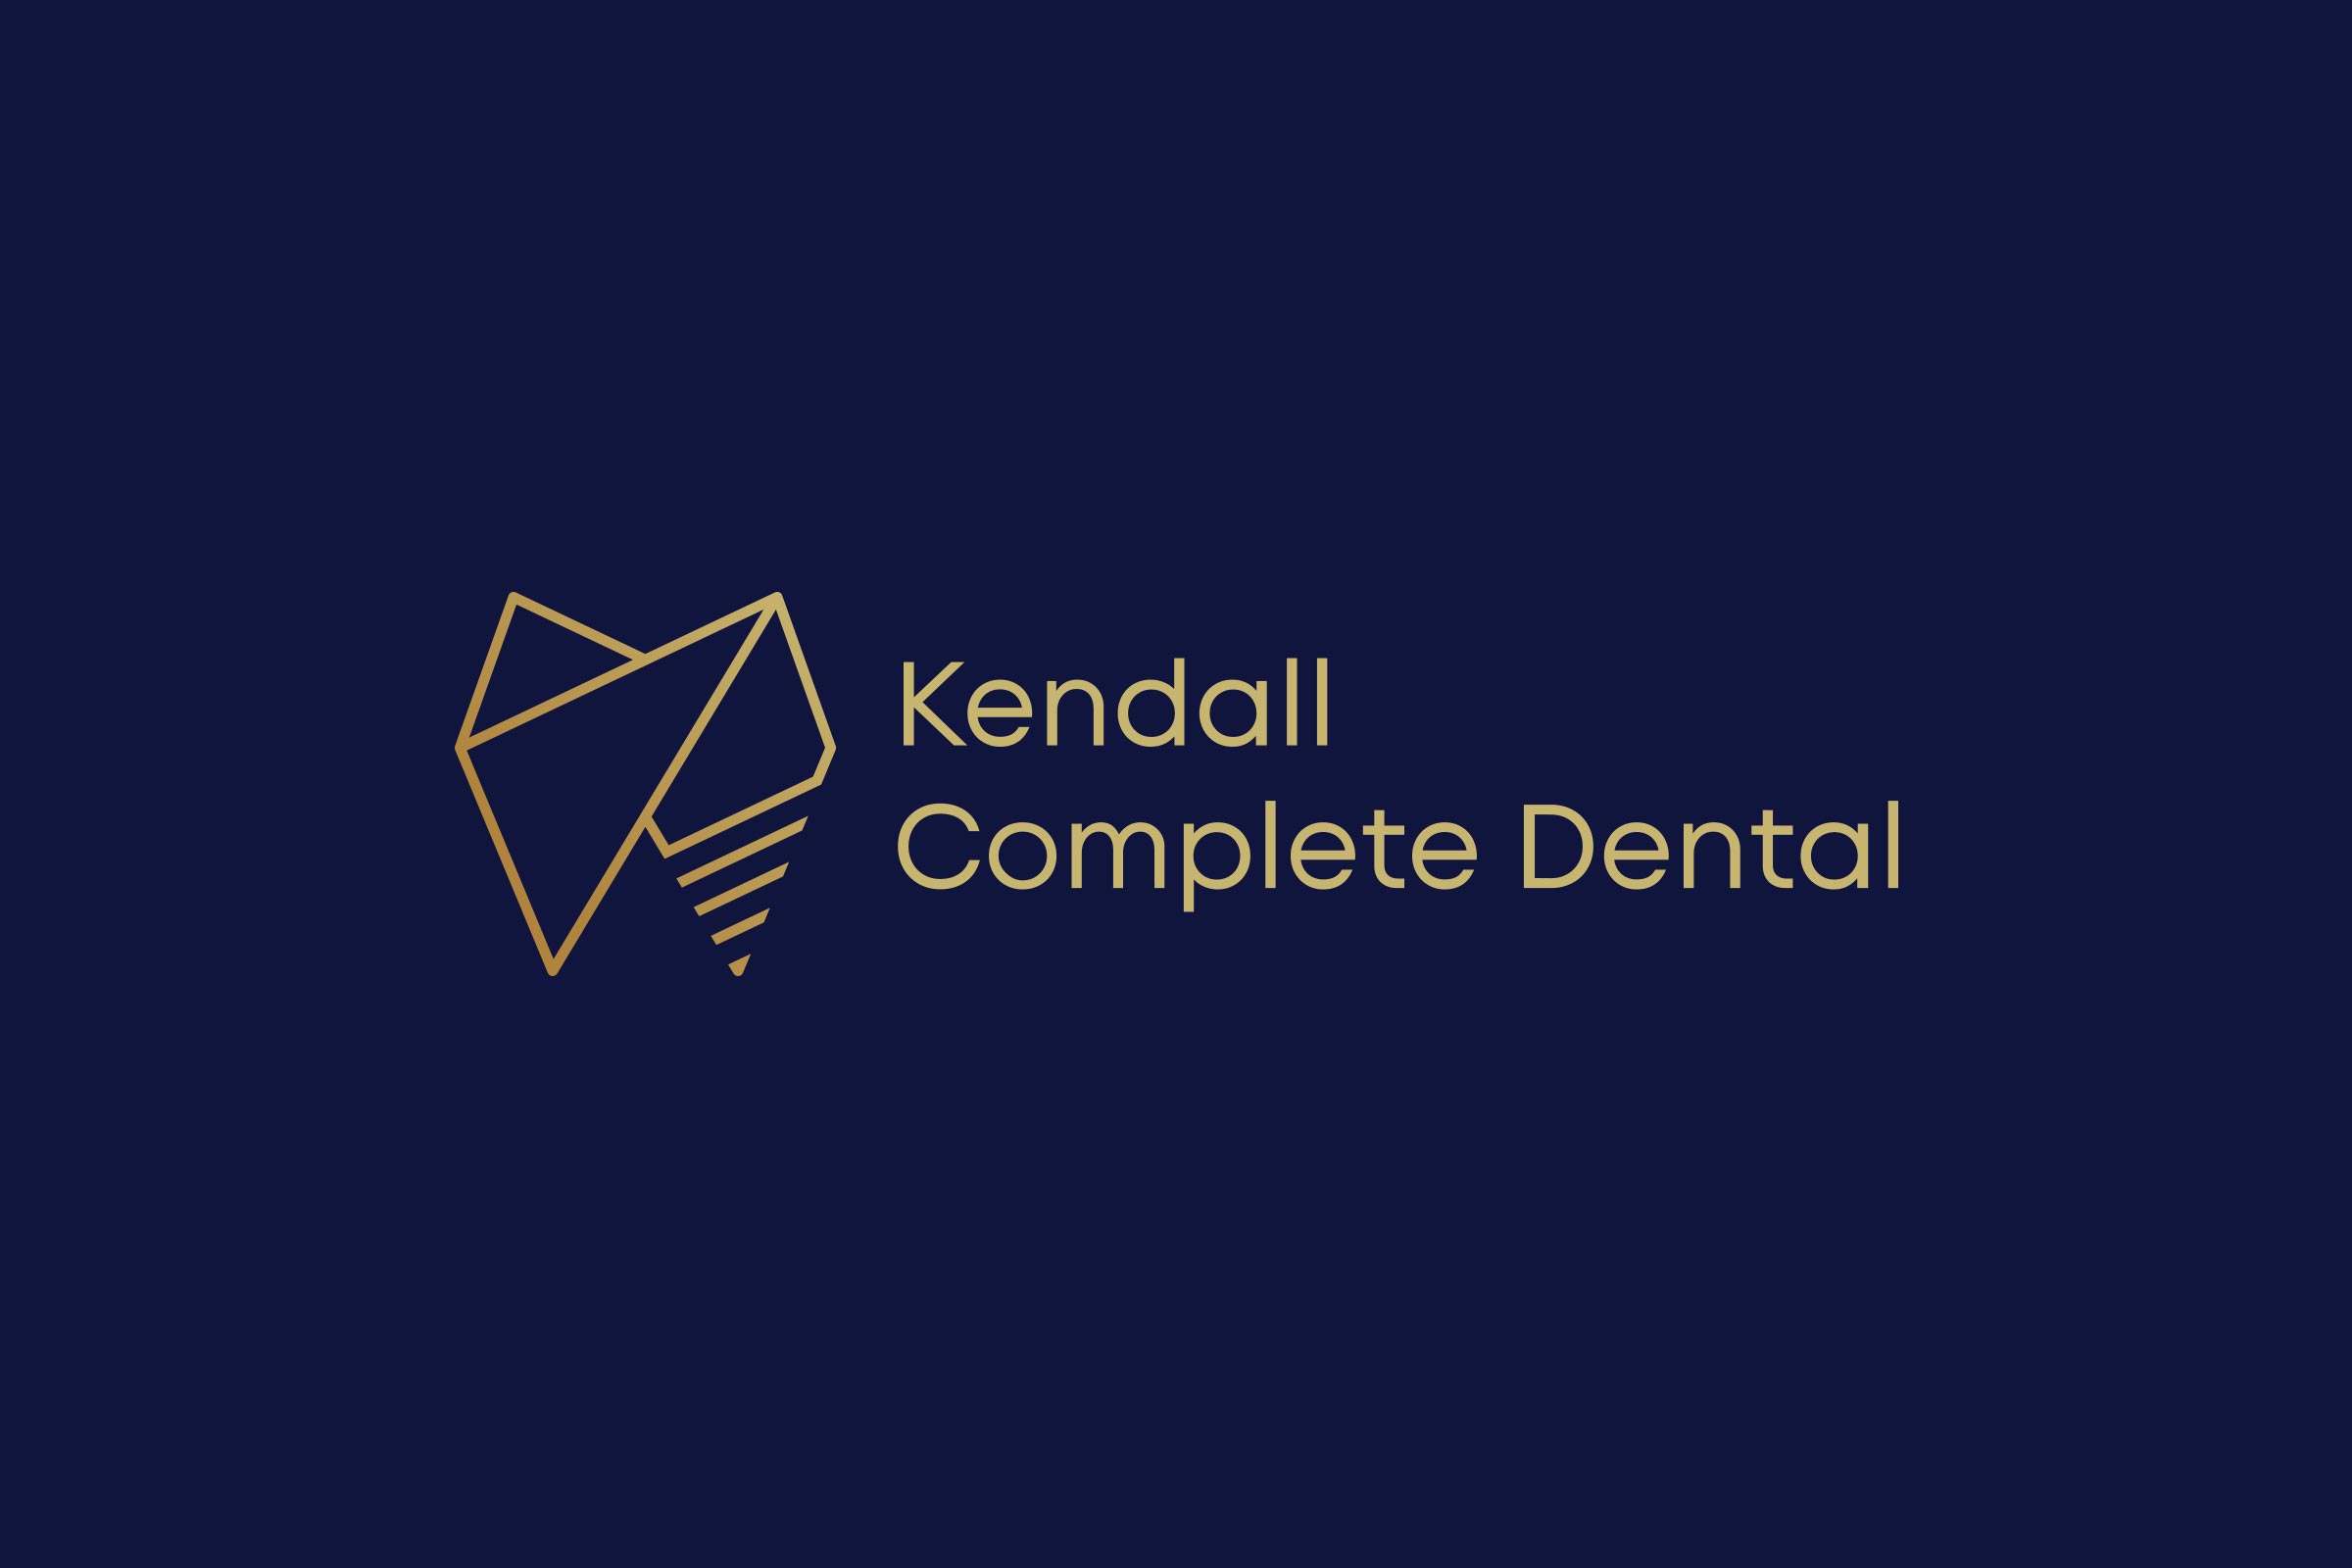 Kendall Complete Dental Branding